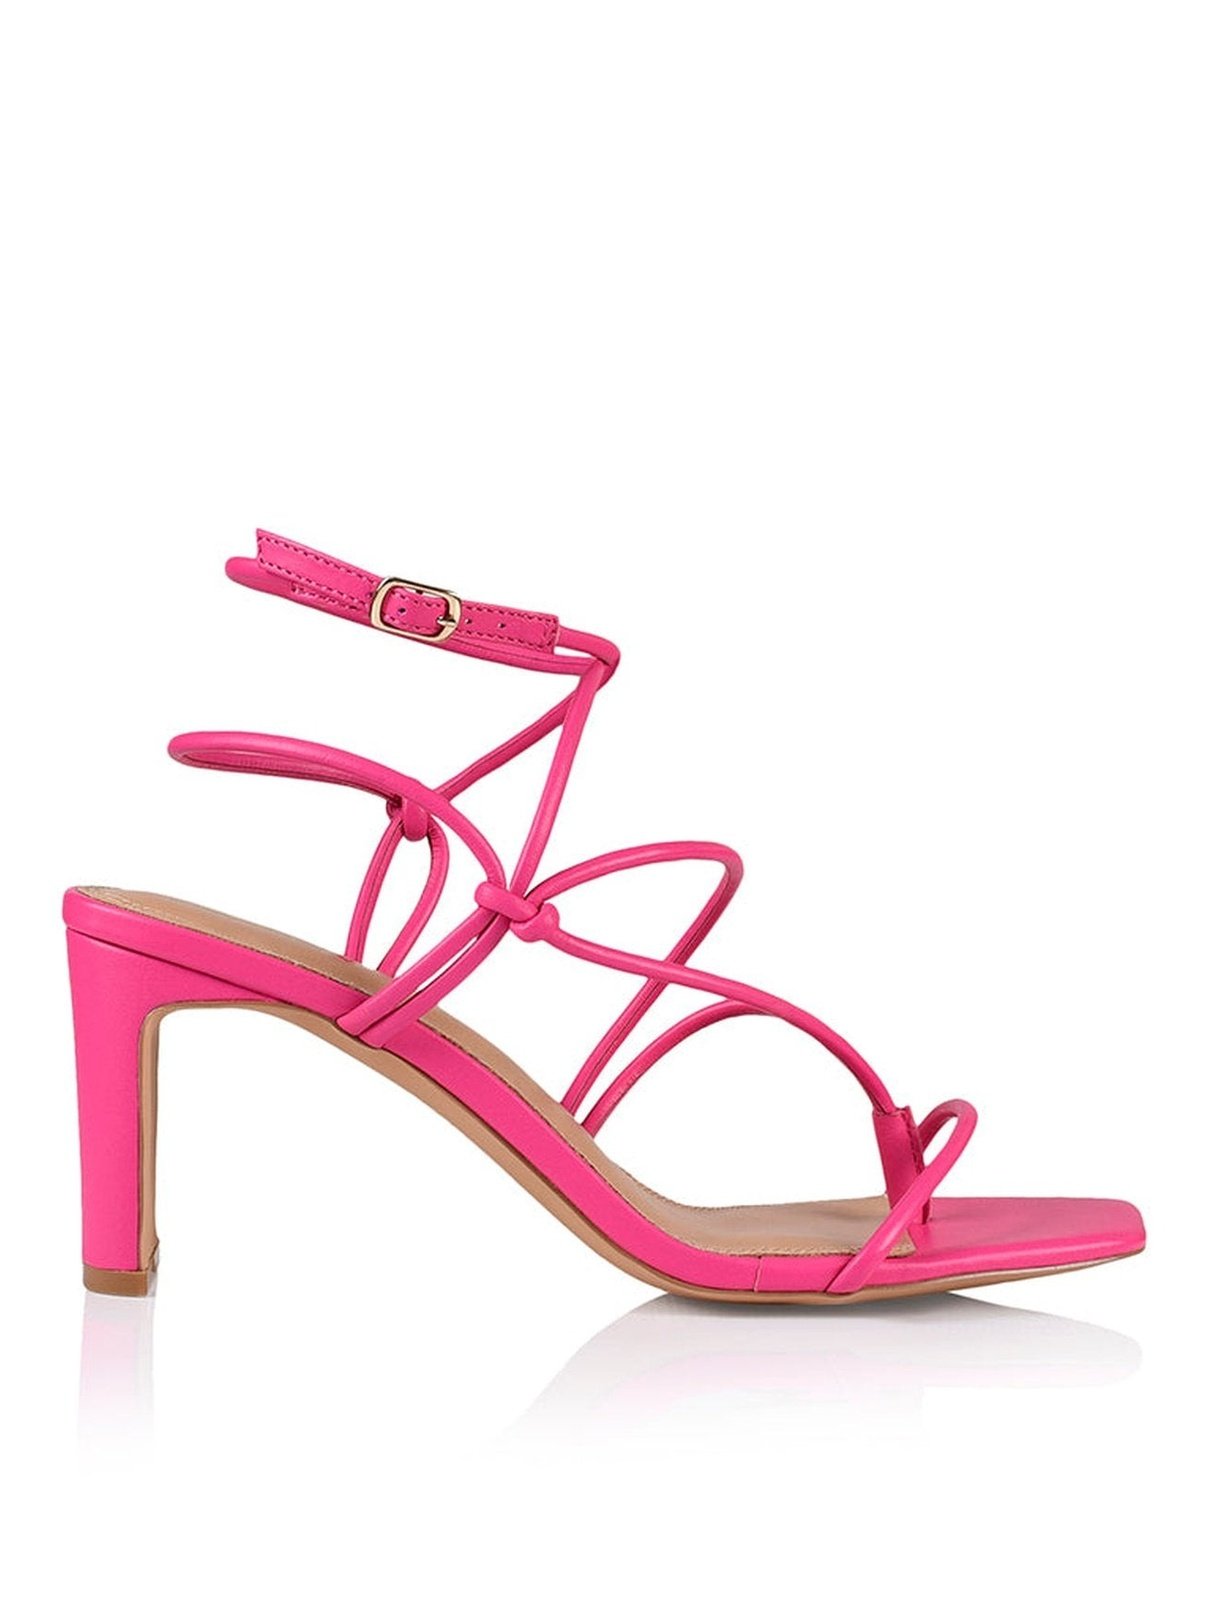 Kilby Block Heel Sandals - Hot Pink Leather